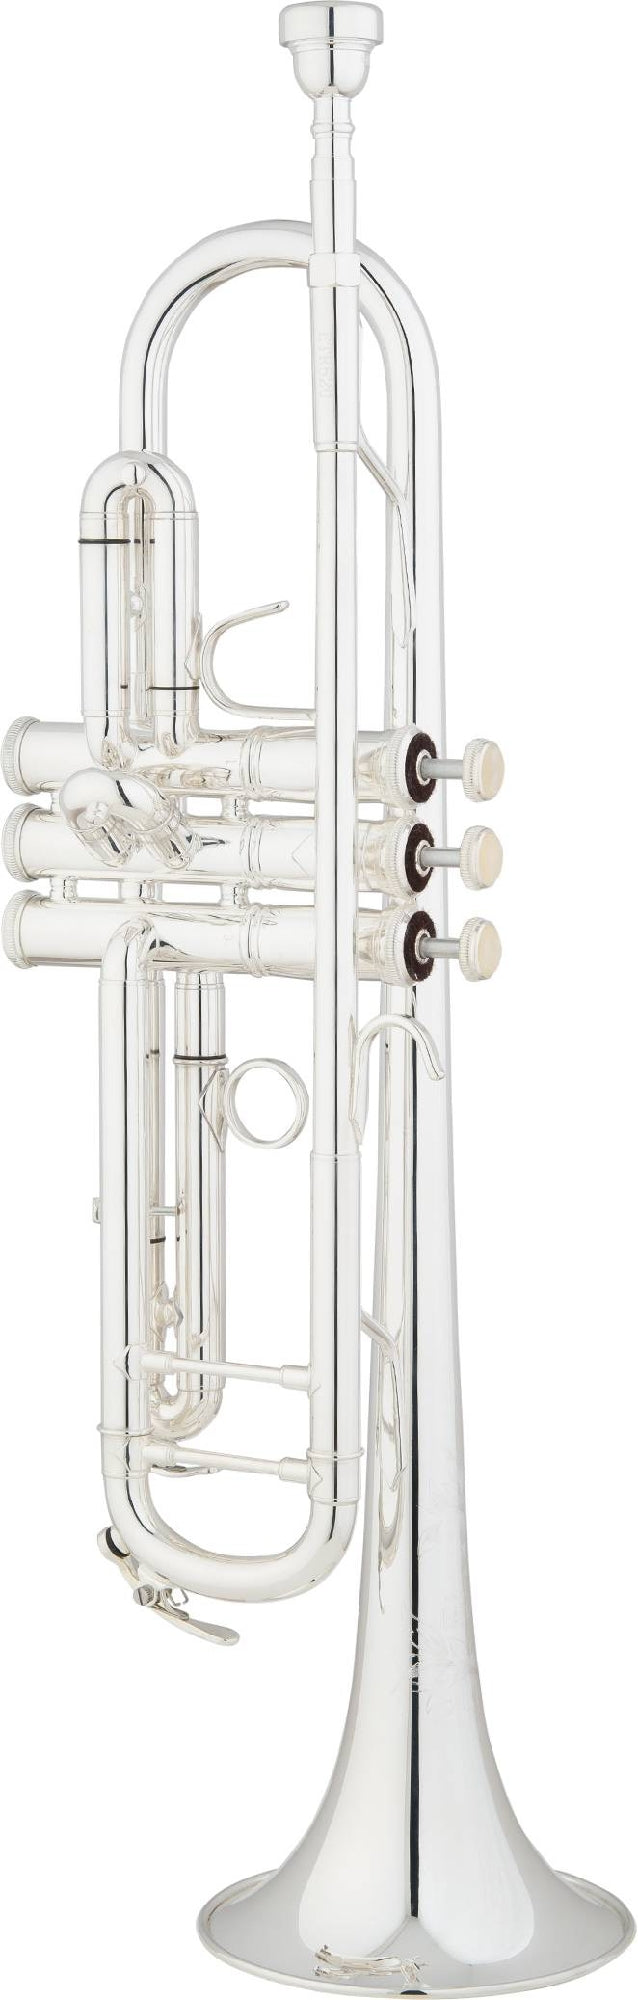 Eastman Etr520s/etr524s Advanced Trumpet